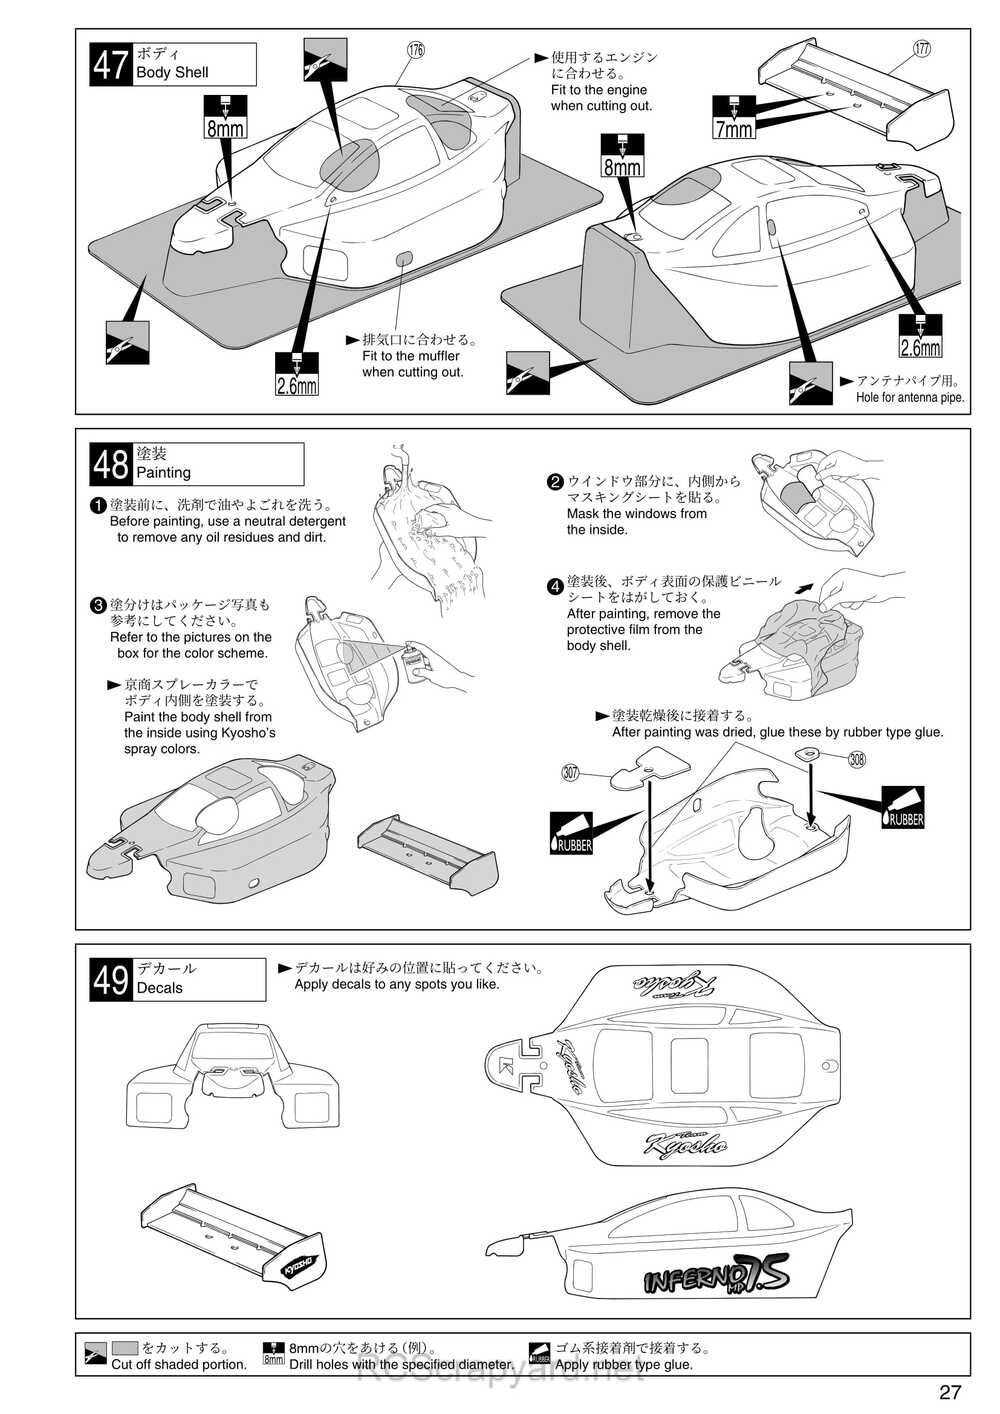 Kyosho - 31273 - Inferno-MP-7-5-Yuichi3 - Manual - Page 27